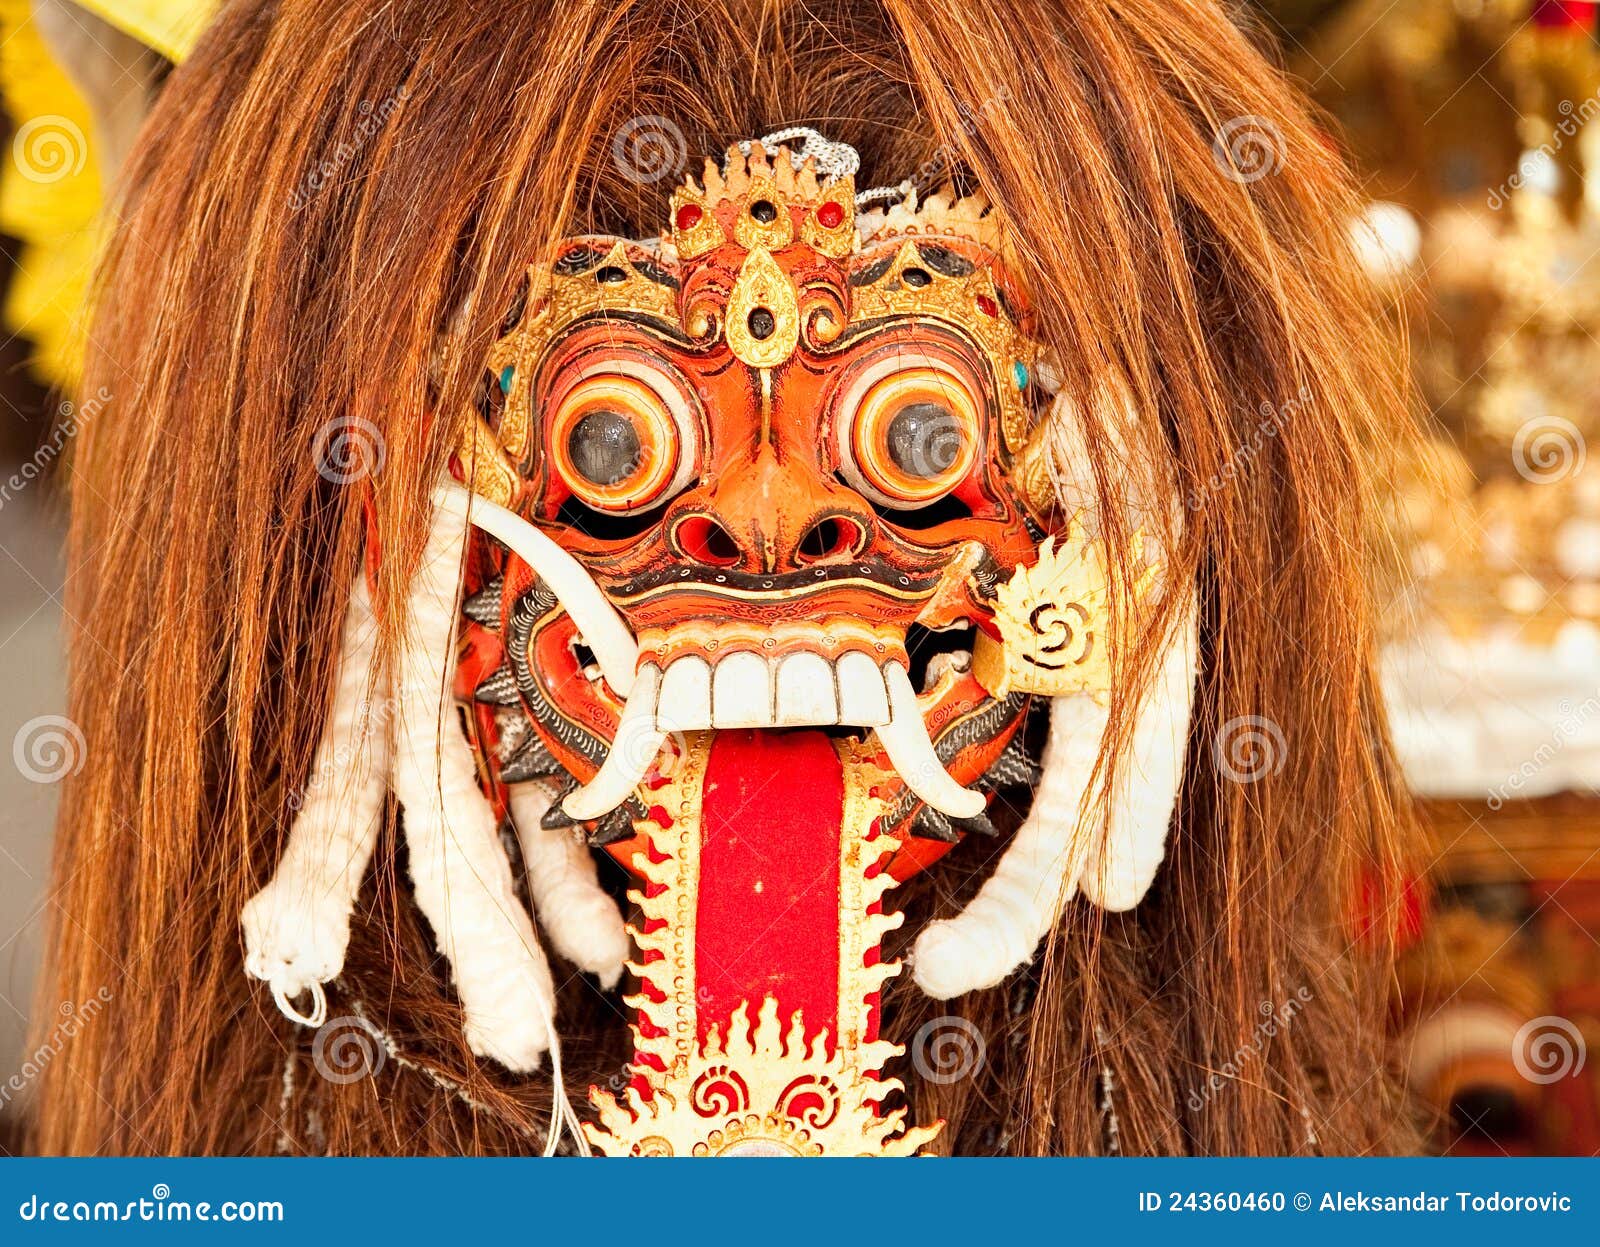 barong-dance-mask-lion-bali-indonesia-24